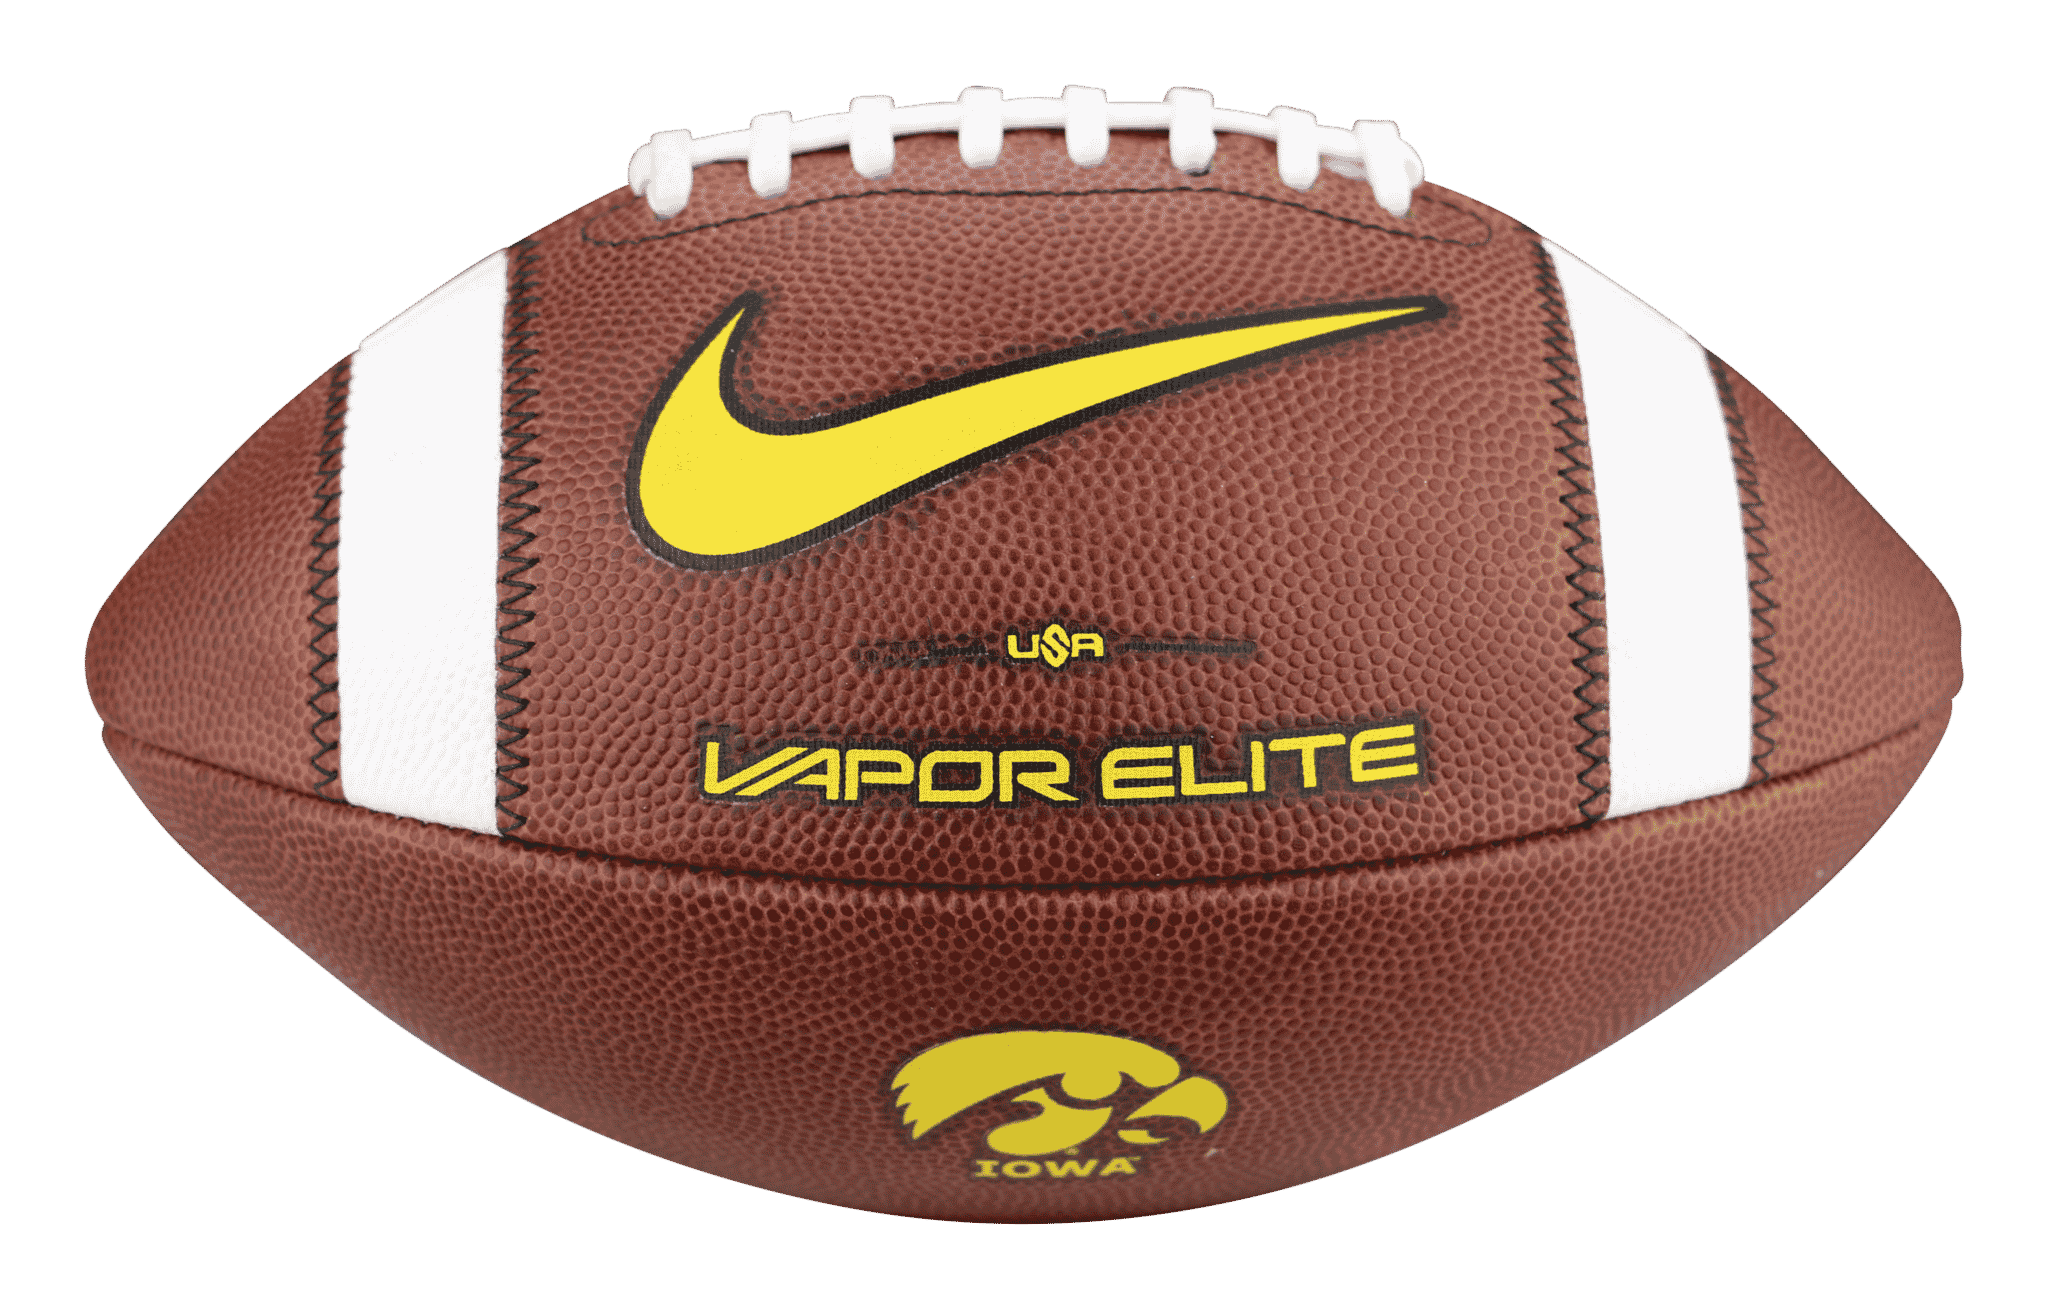 Iowa Hawkeyes  Official Nike Game Football - Big Game USA